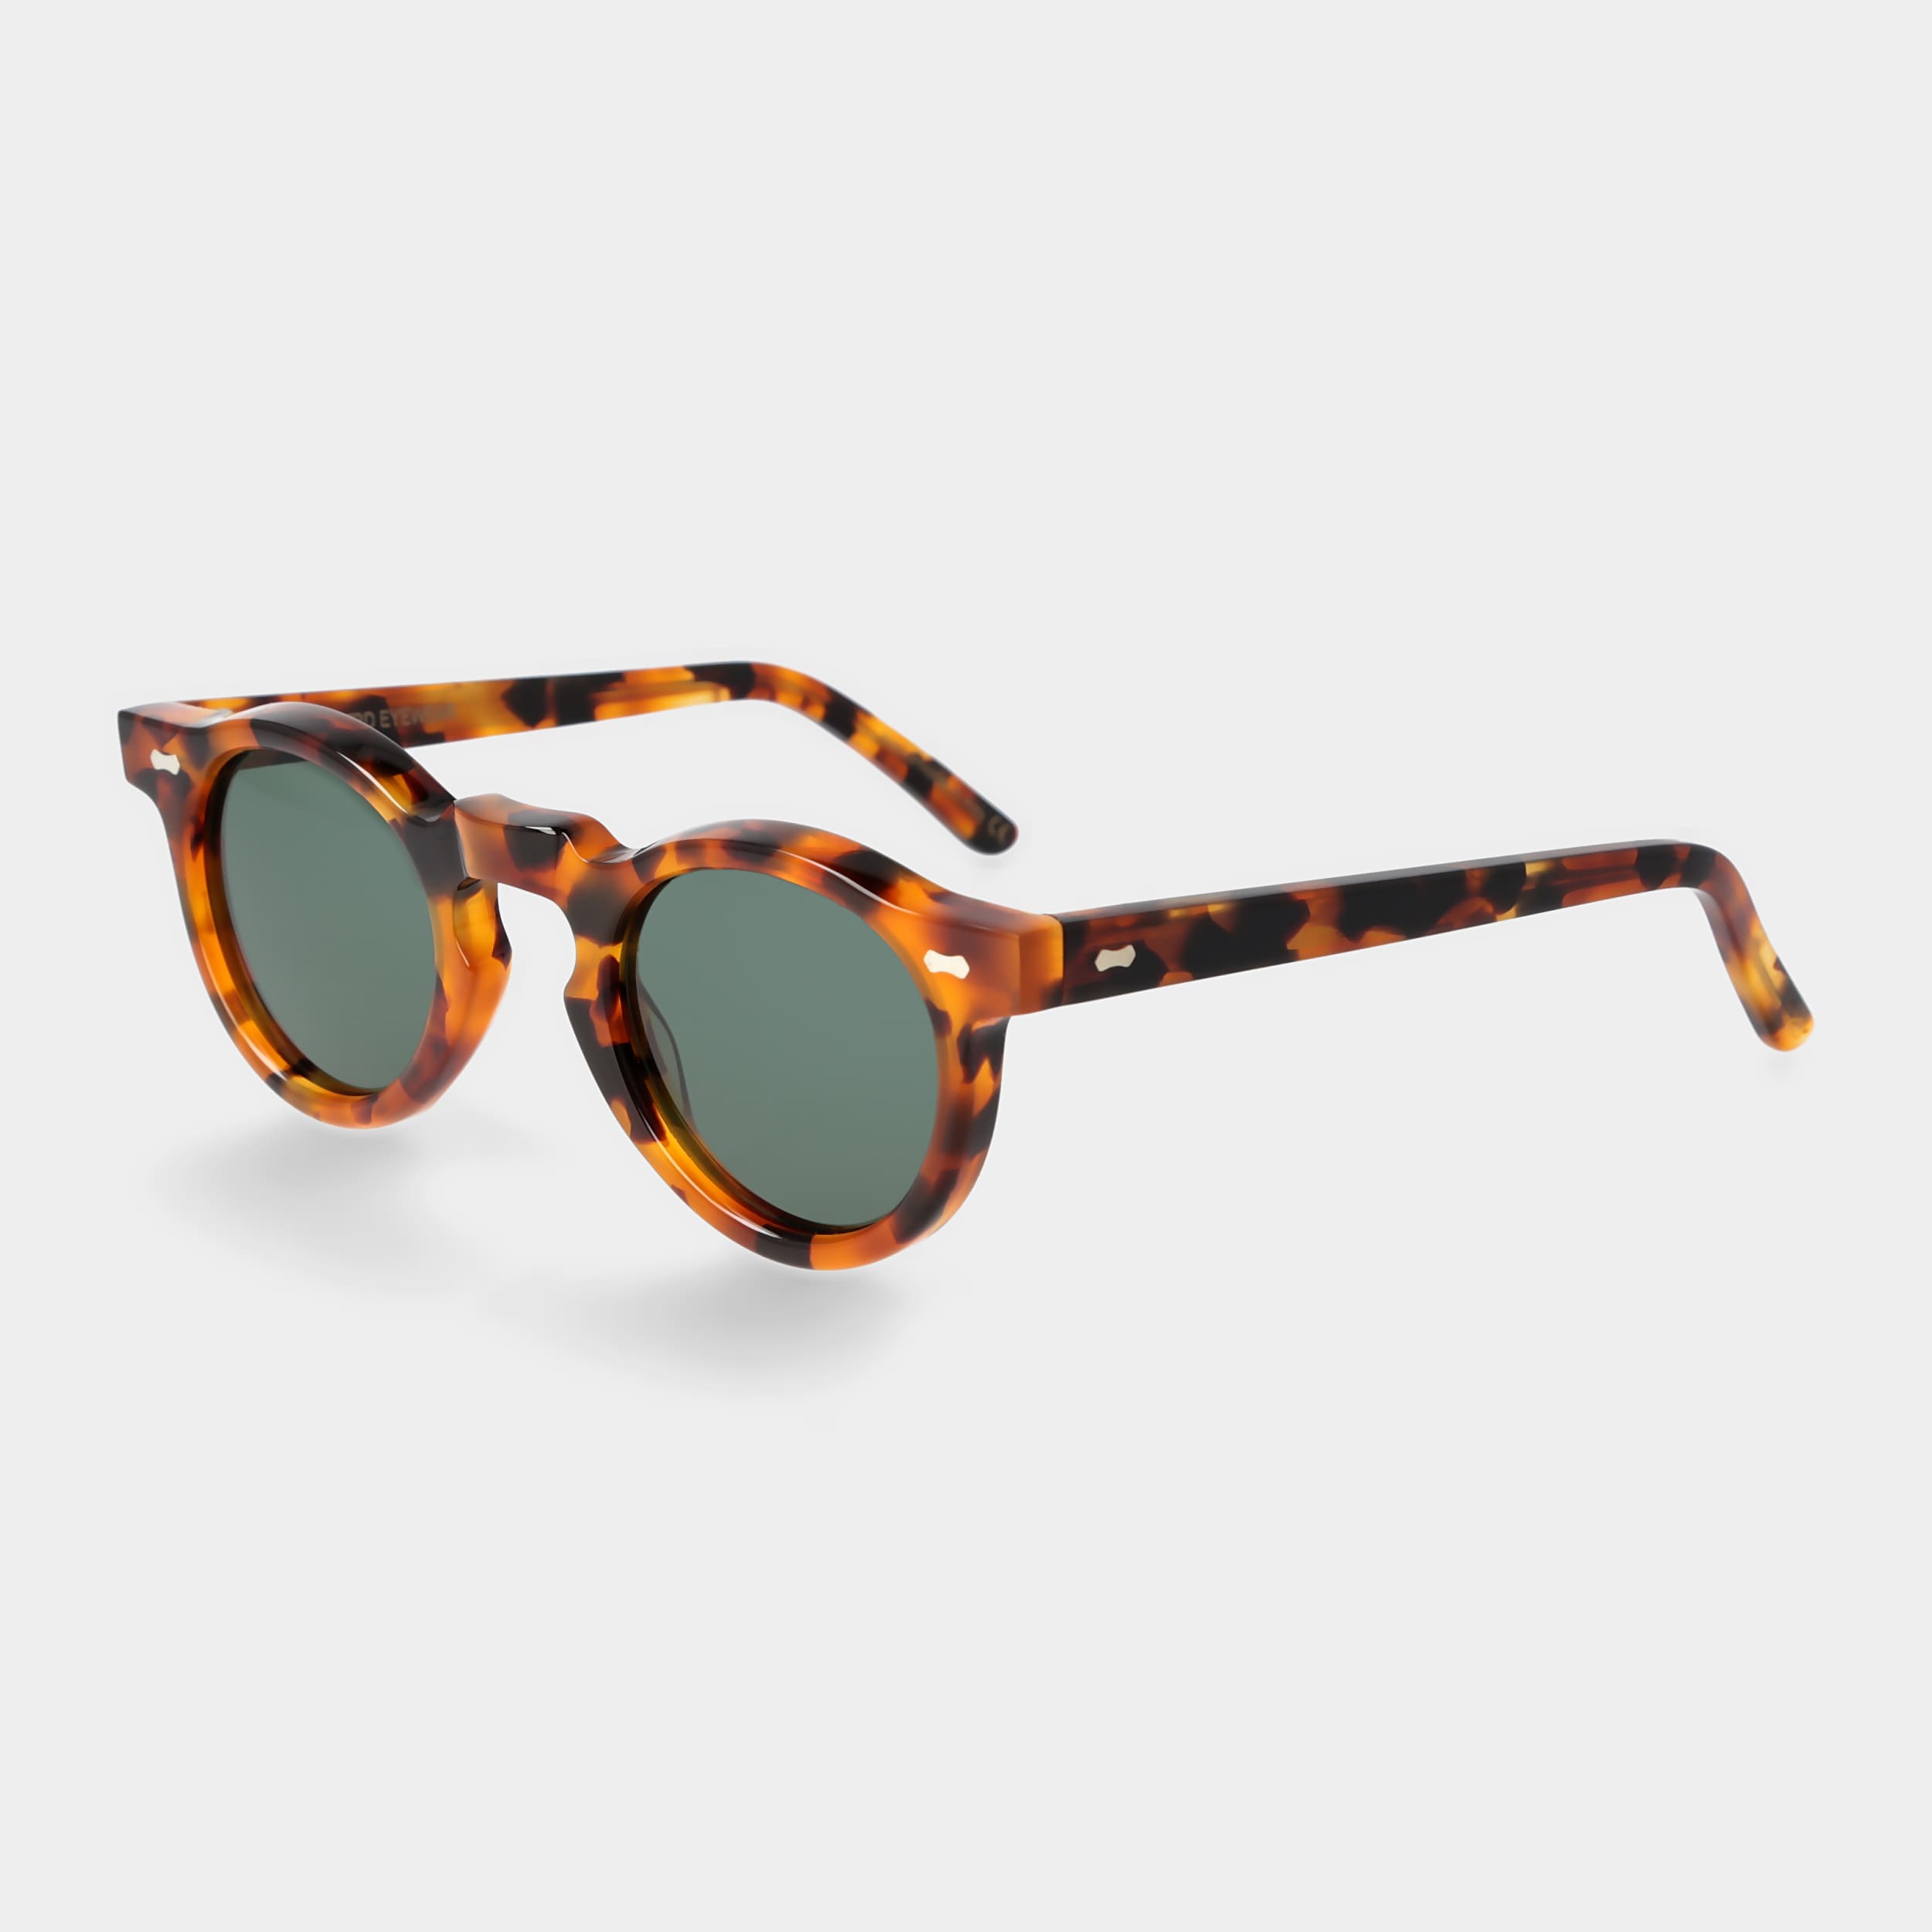 sunglasses-welt-amber-tortoise-bottle-green-tbd-eyewear-total